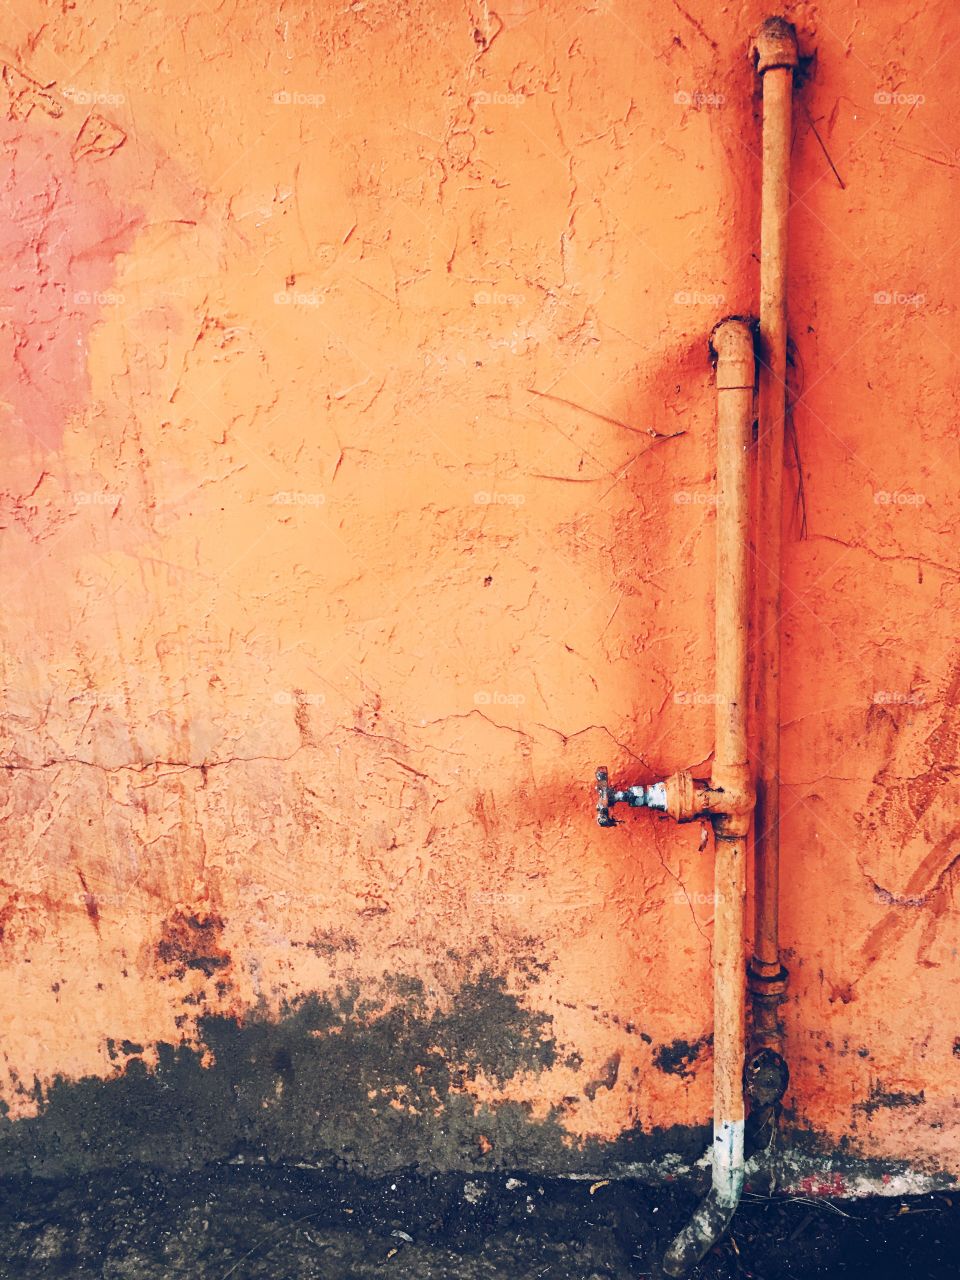 Orange walls